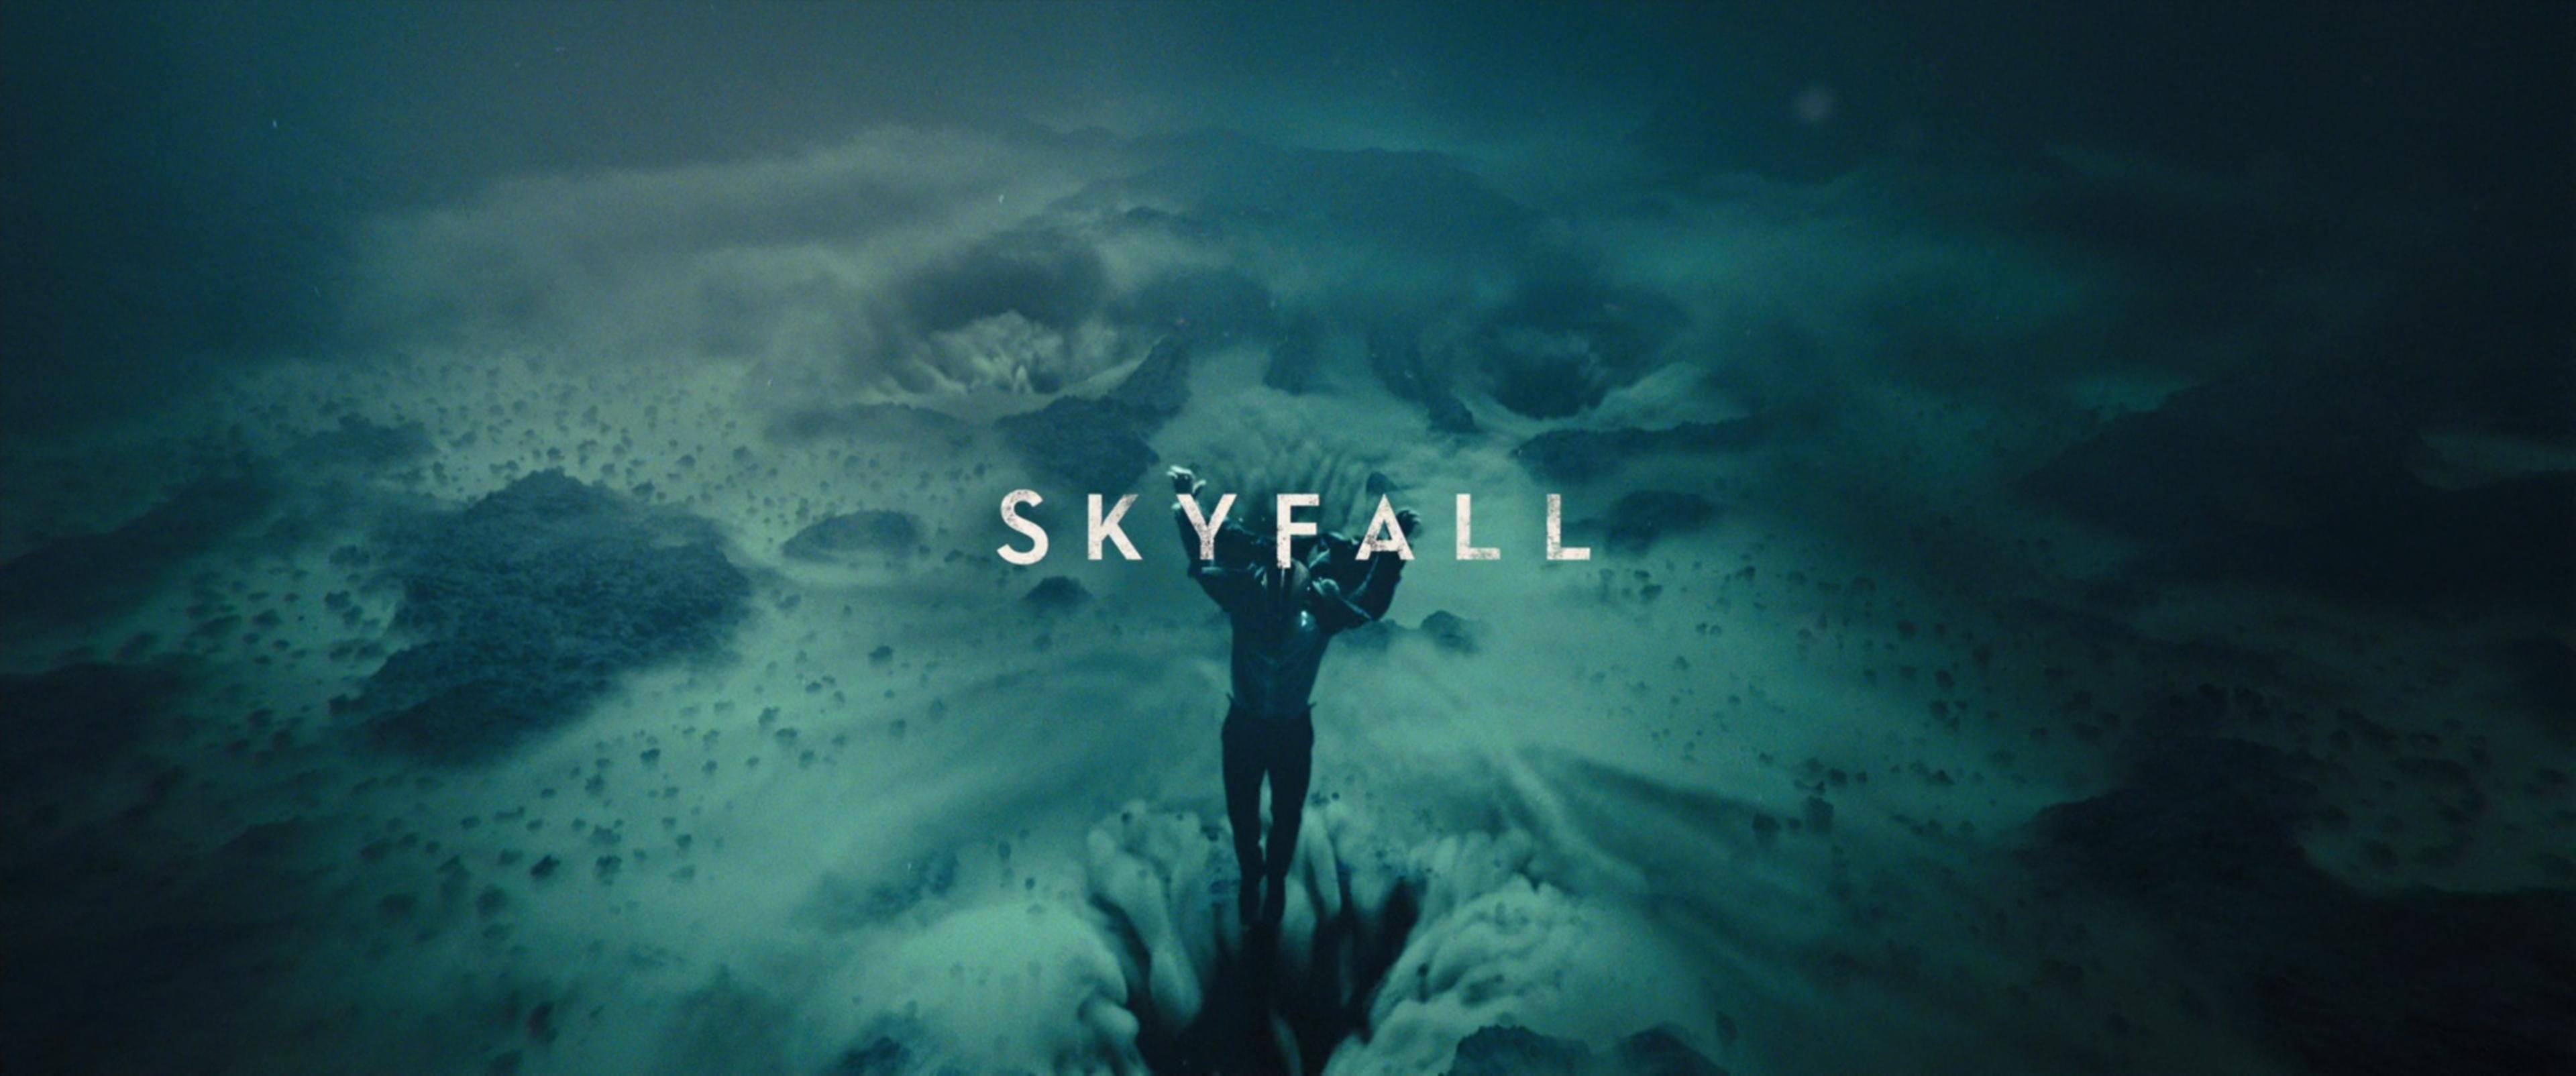 Skyfall Wallpapers